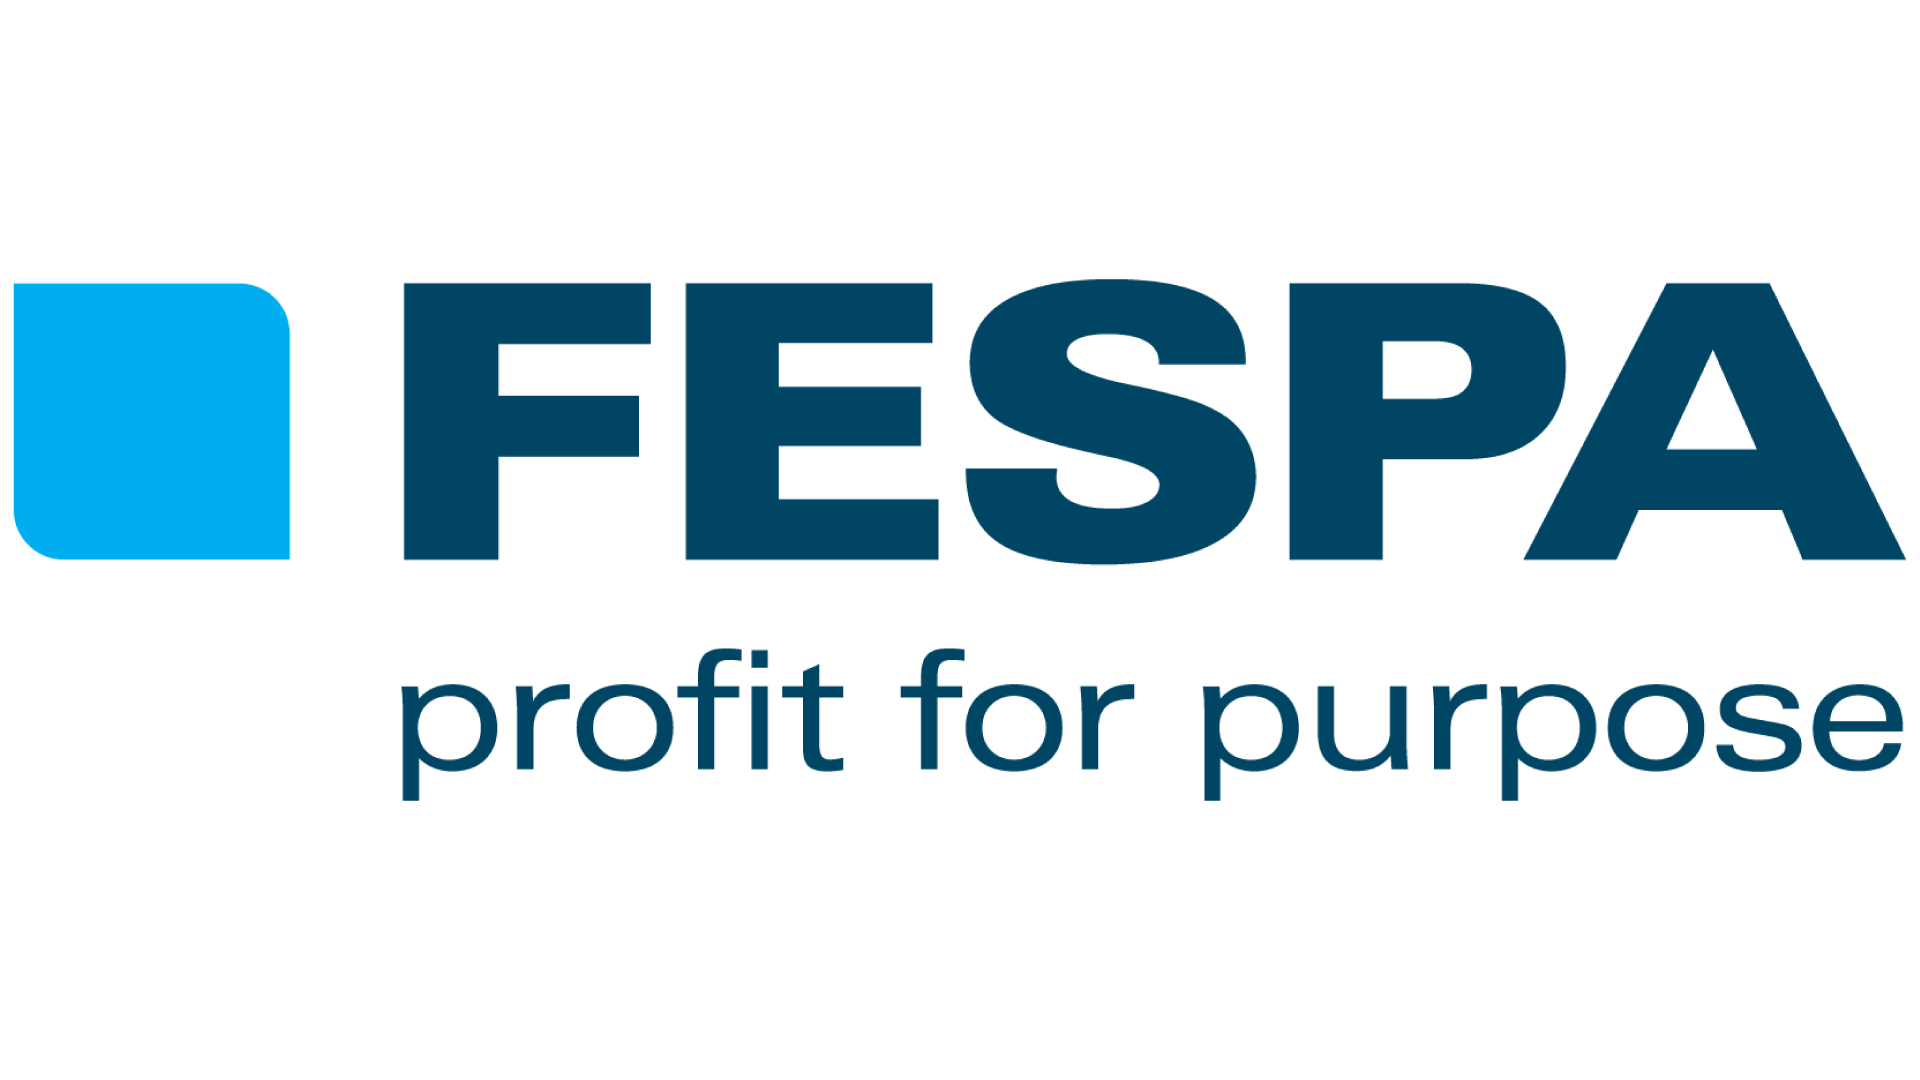 FESPA logo